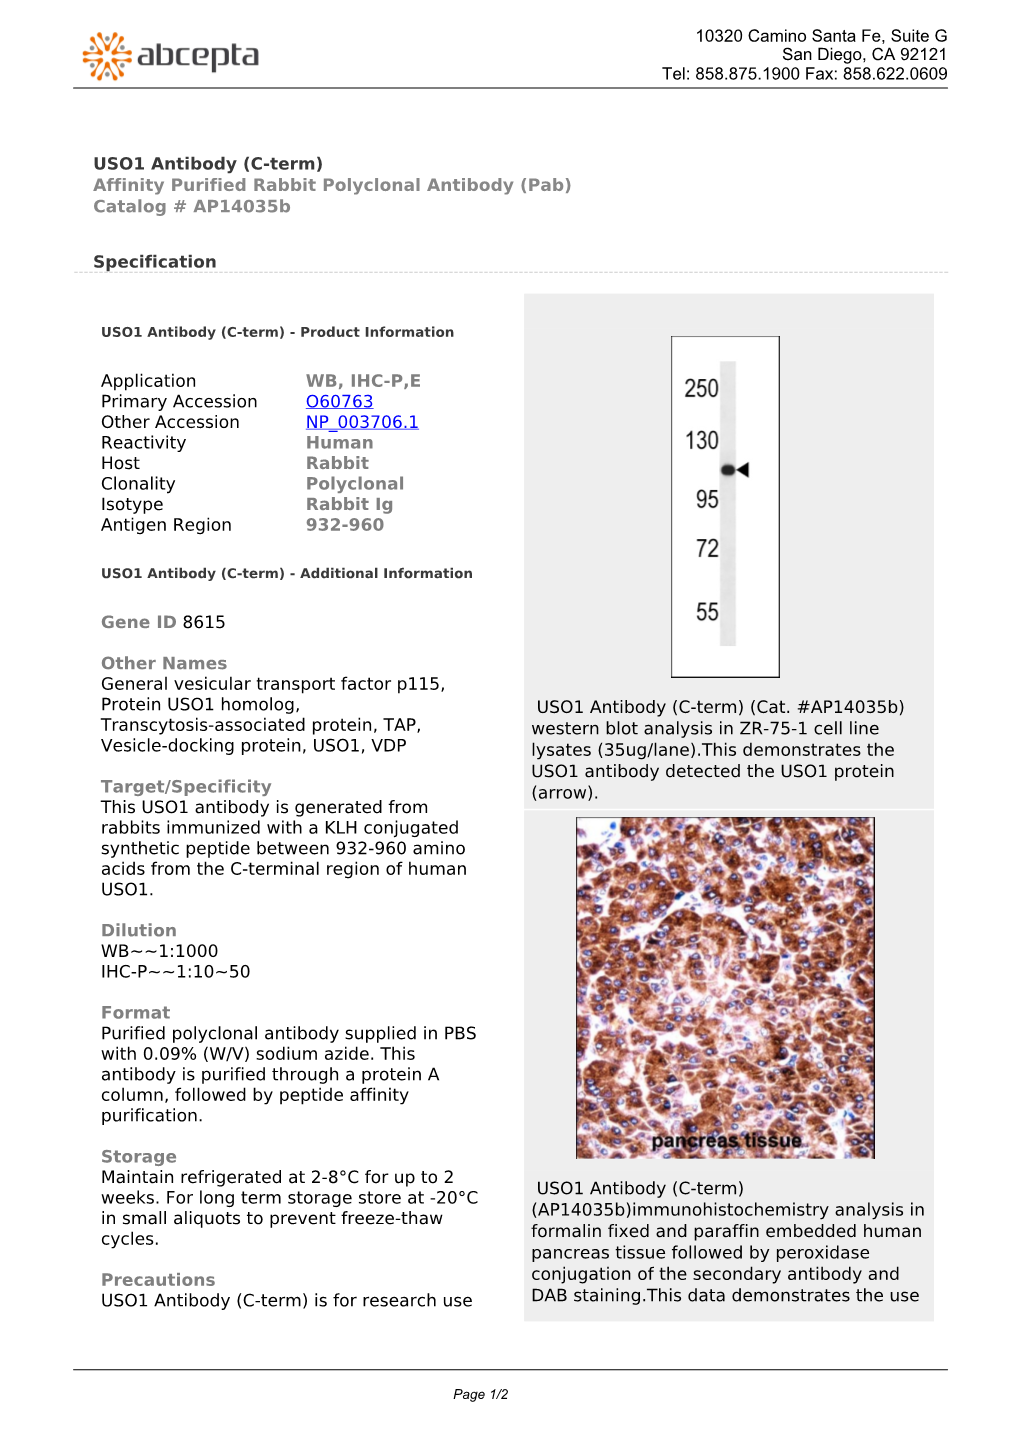 USO1 Antibody (C-Term) Affinity Purified Rabbit Polyclonal Antibody (Pab) Catalog # Ap14035b